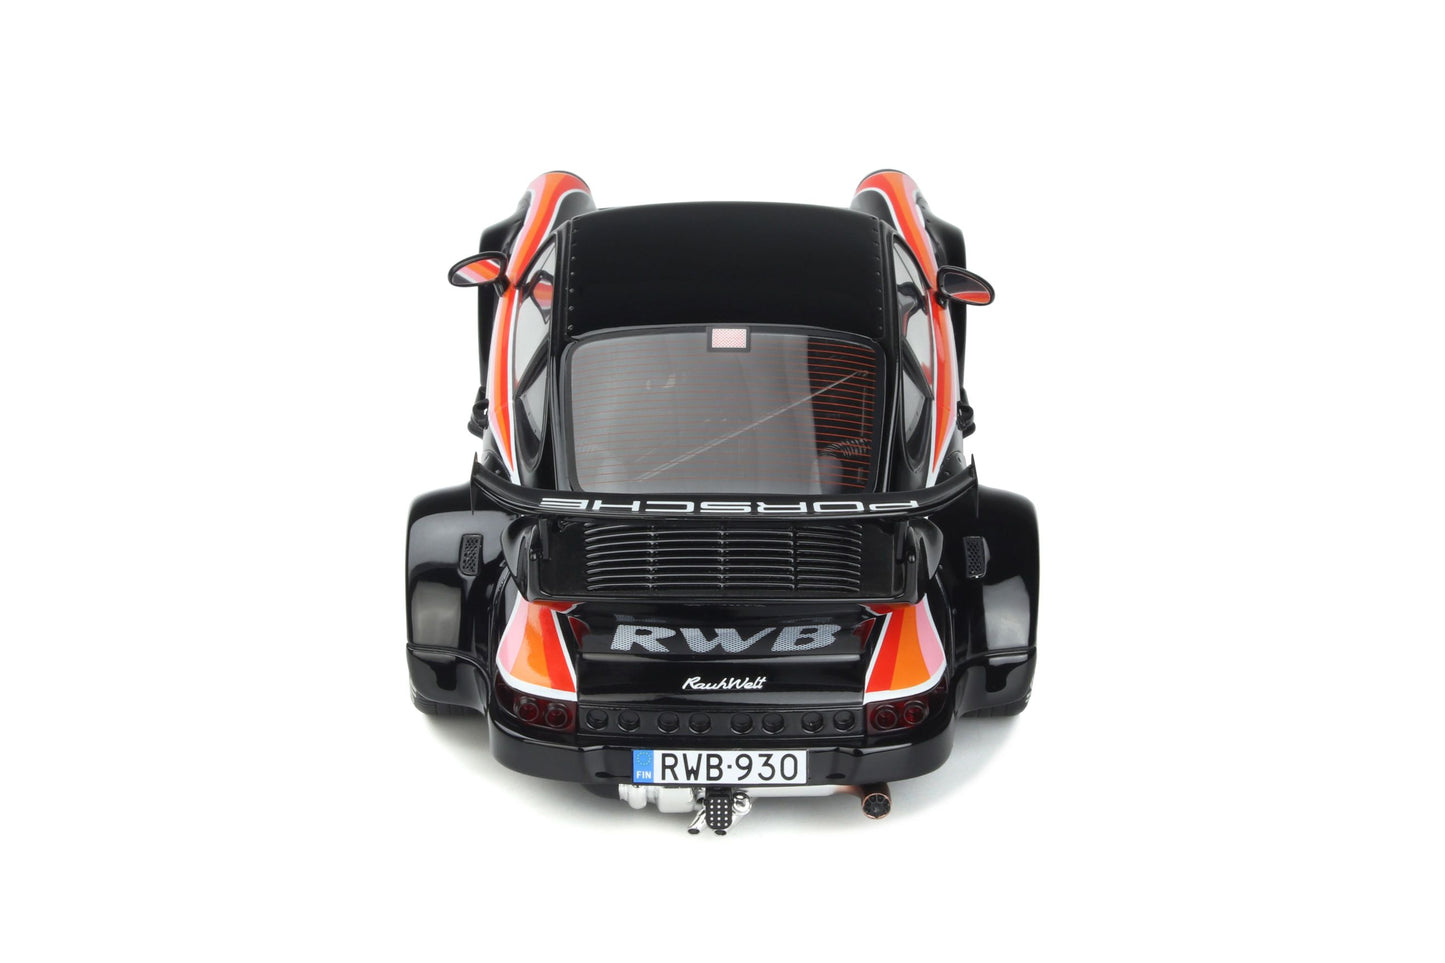 GT Spirit - RWB Porsche 911 (930) "Yaju" (Black) 1:18 Scale Model Car